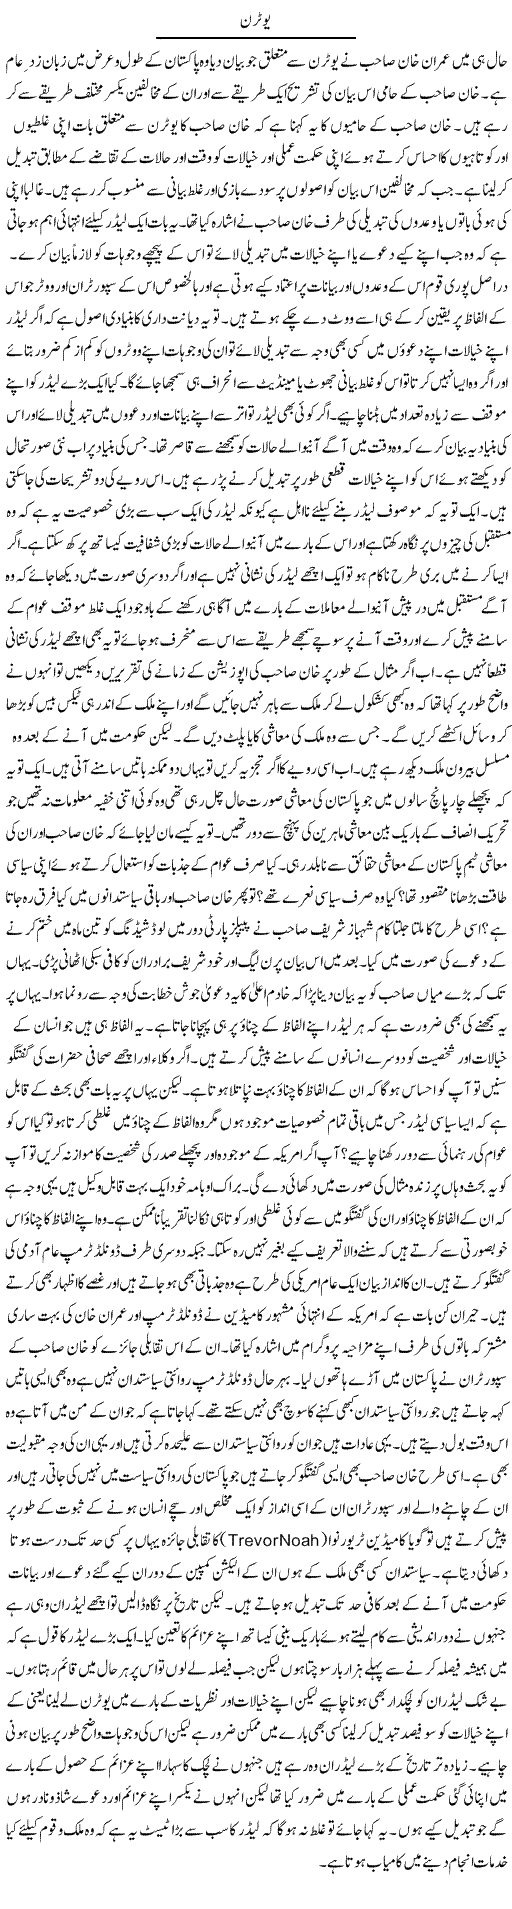 U-Trn | Syed Zeeshan Haider | Daily Urdu Columns